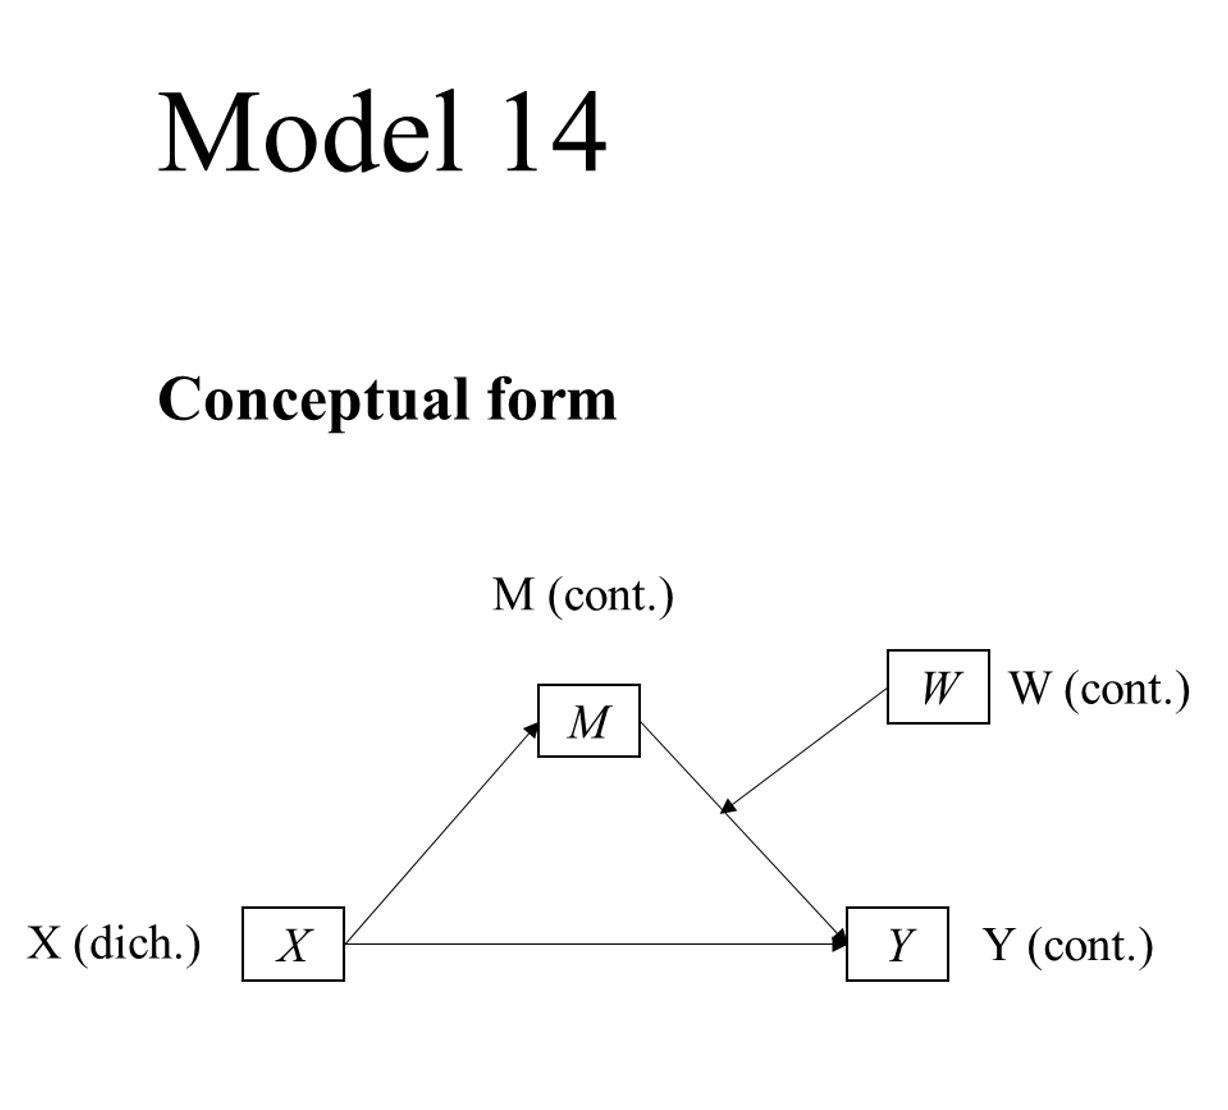 process model 14 (dich X - cont Y - cont M - cont W)